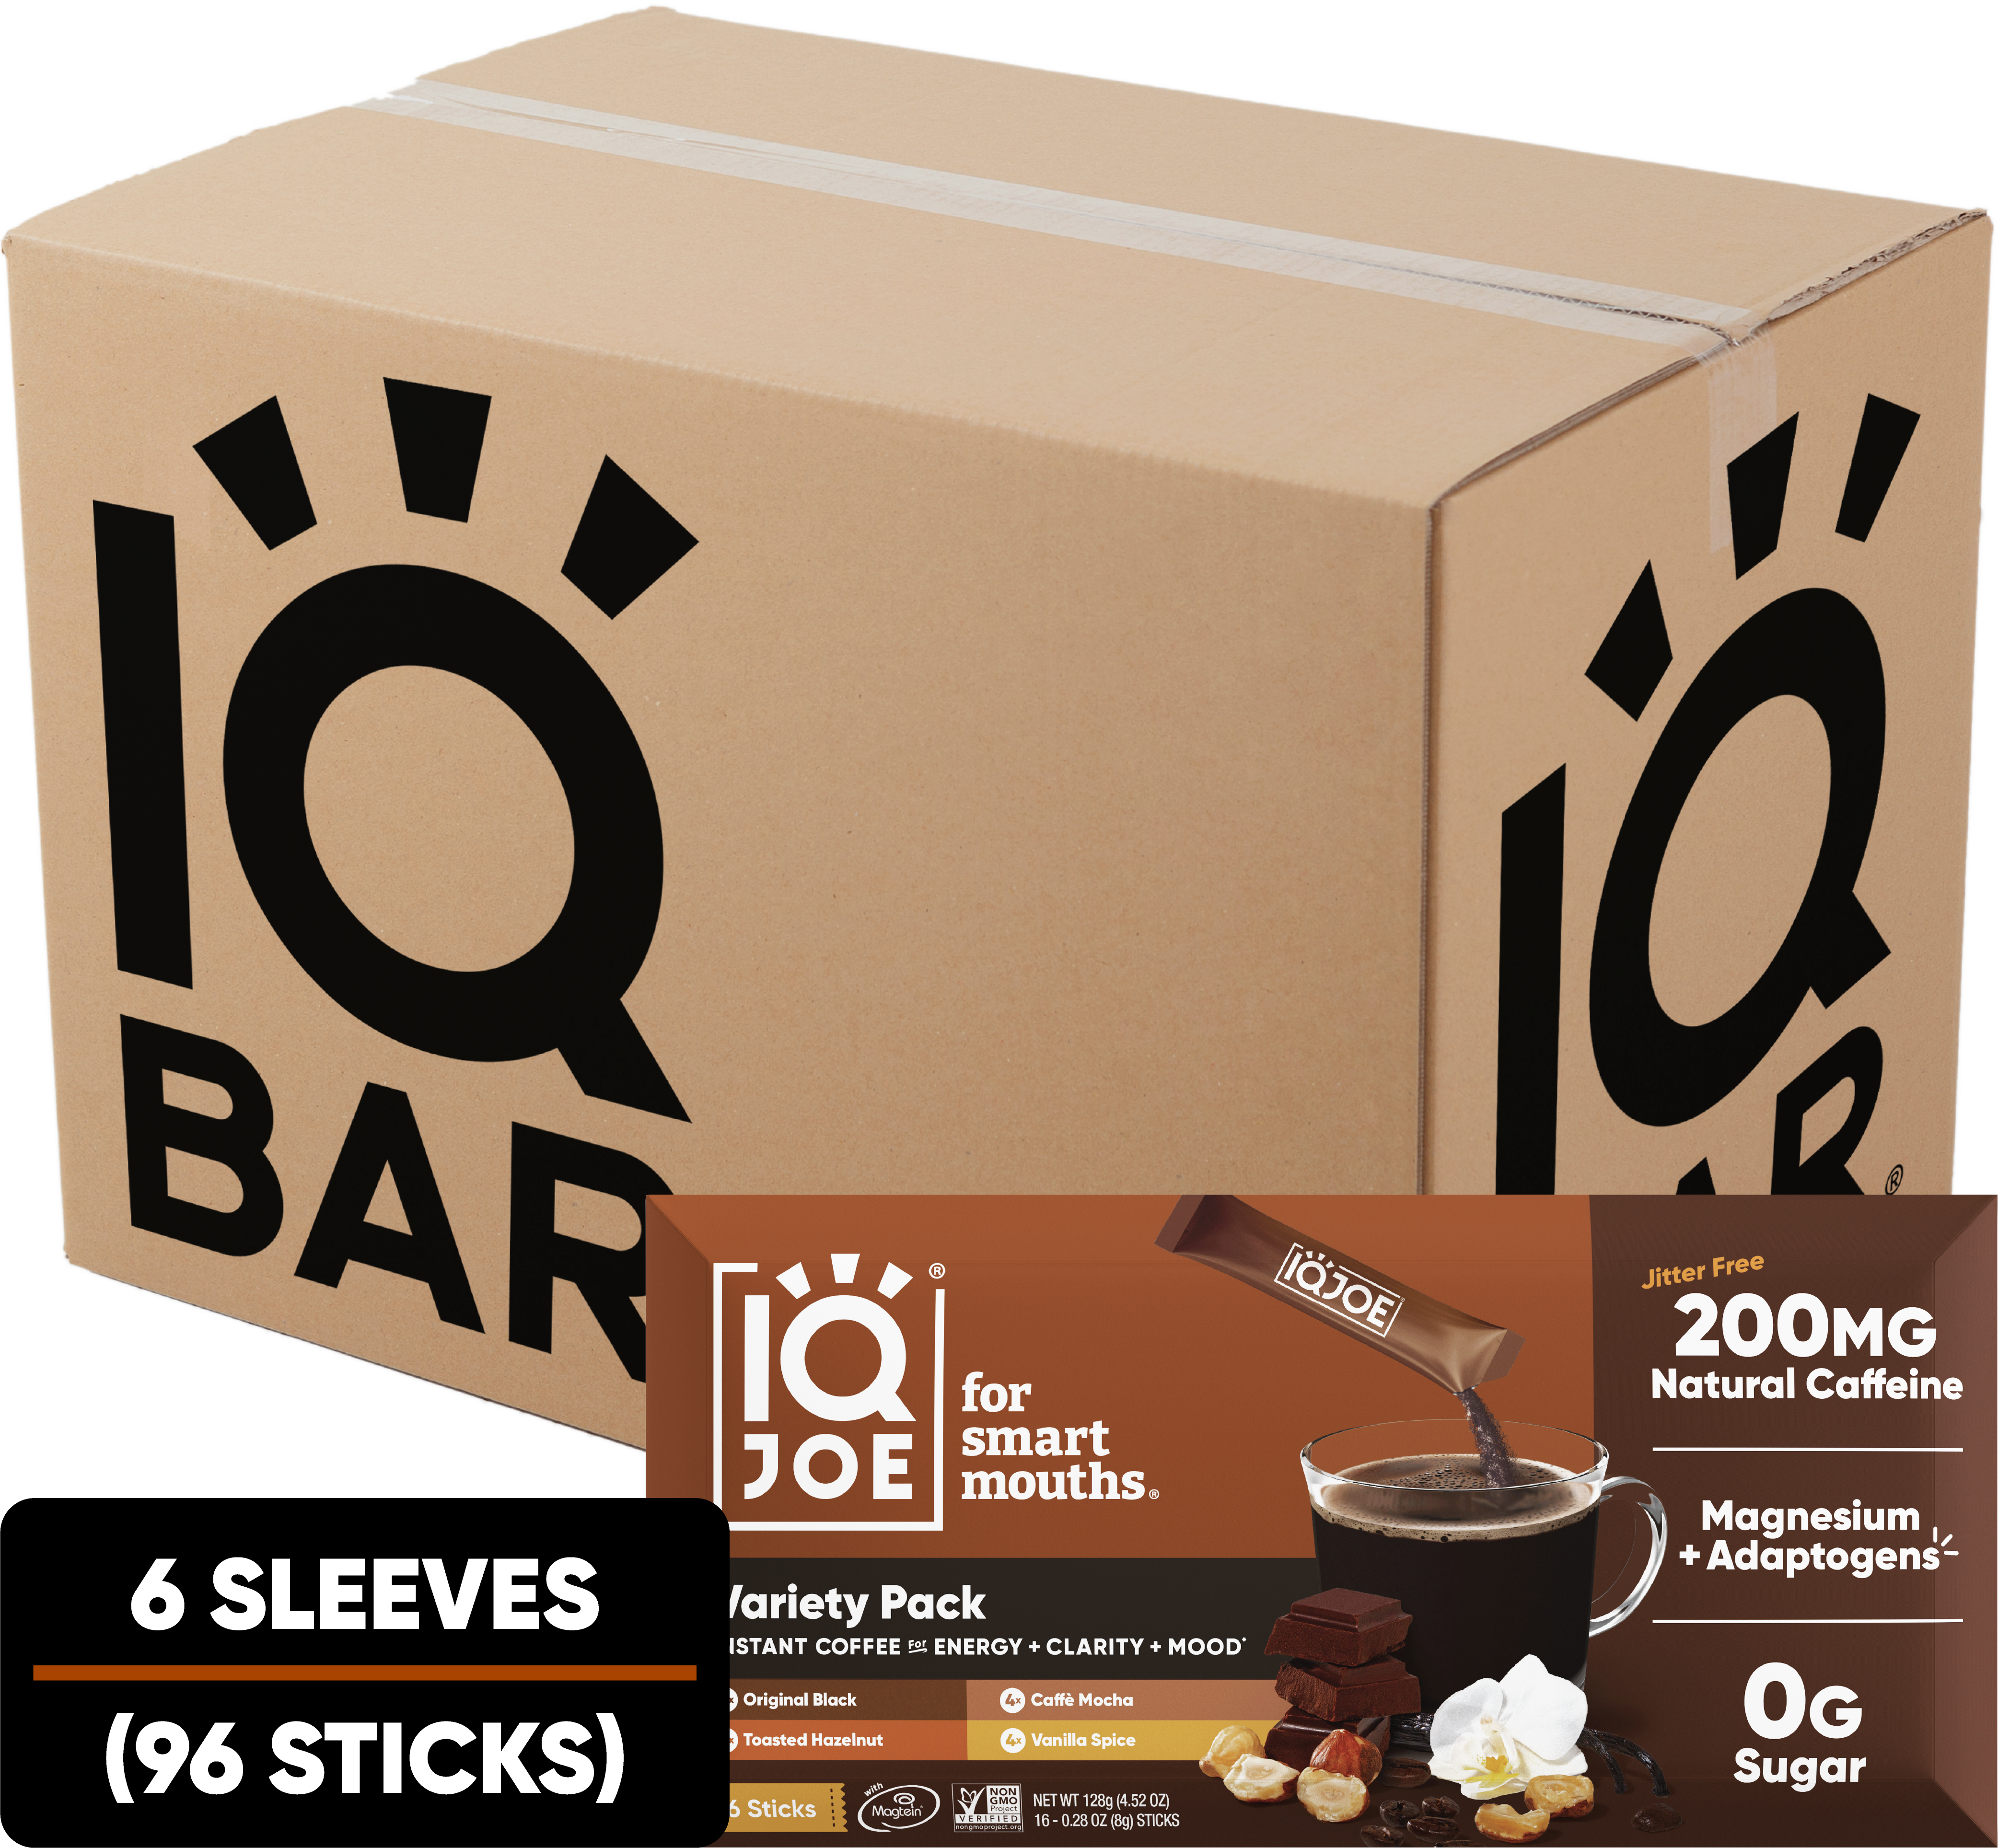 IQJOE Variety Pack Case (96 Sticks)